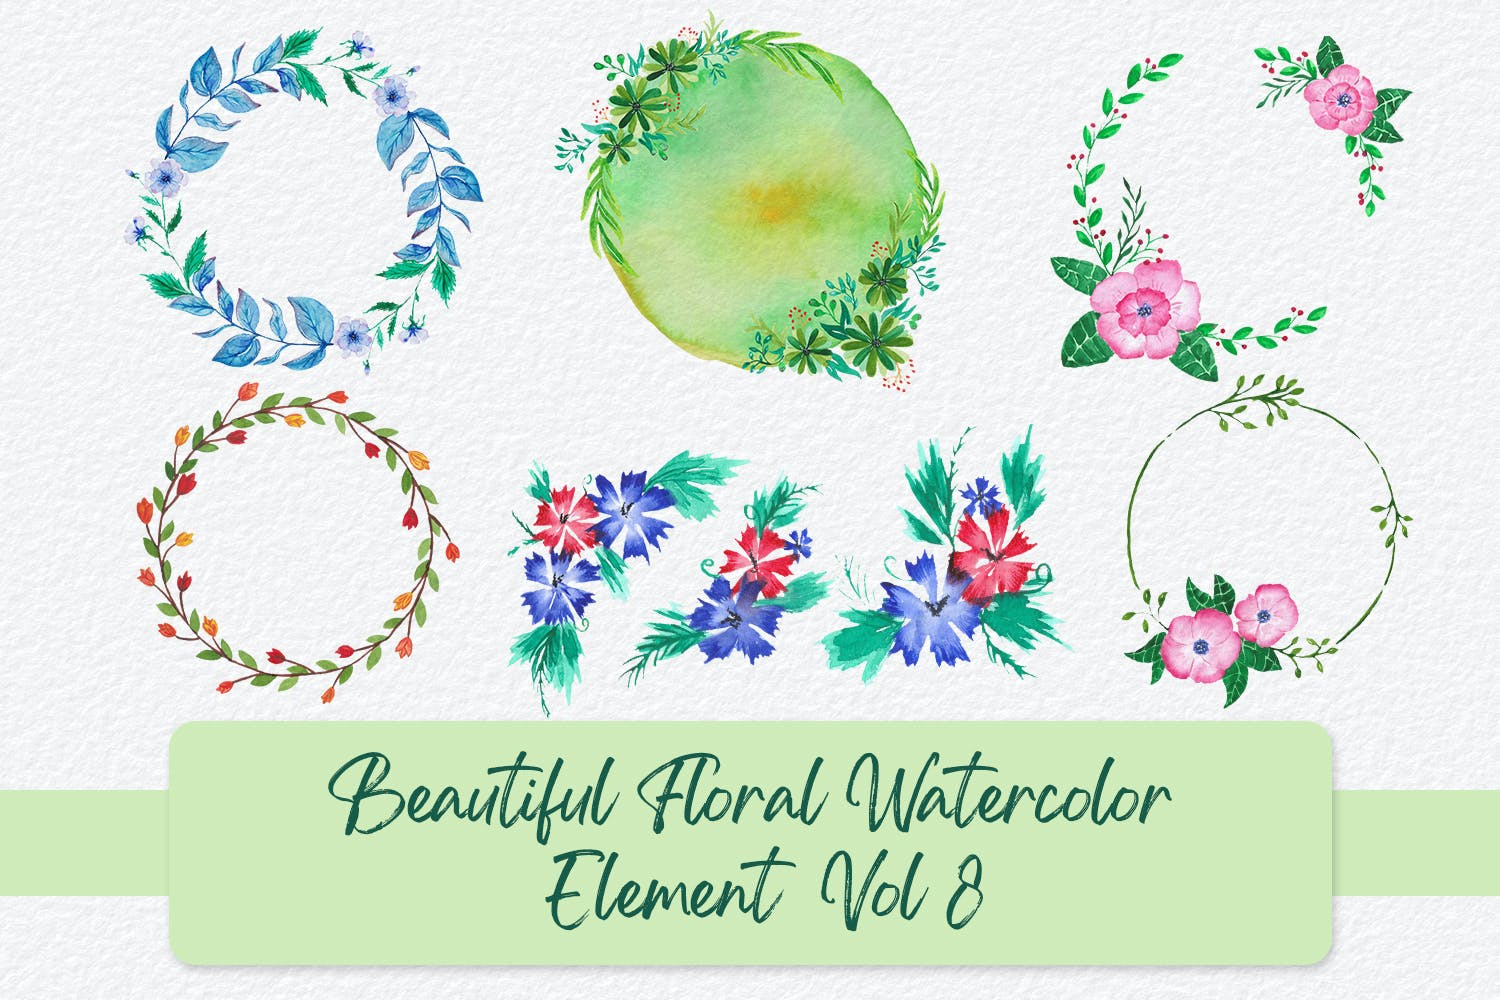 美丽花卉水彩元素插画素材v8 Beautiful Floral Watercolor Elements Vol 8